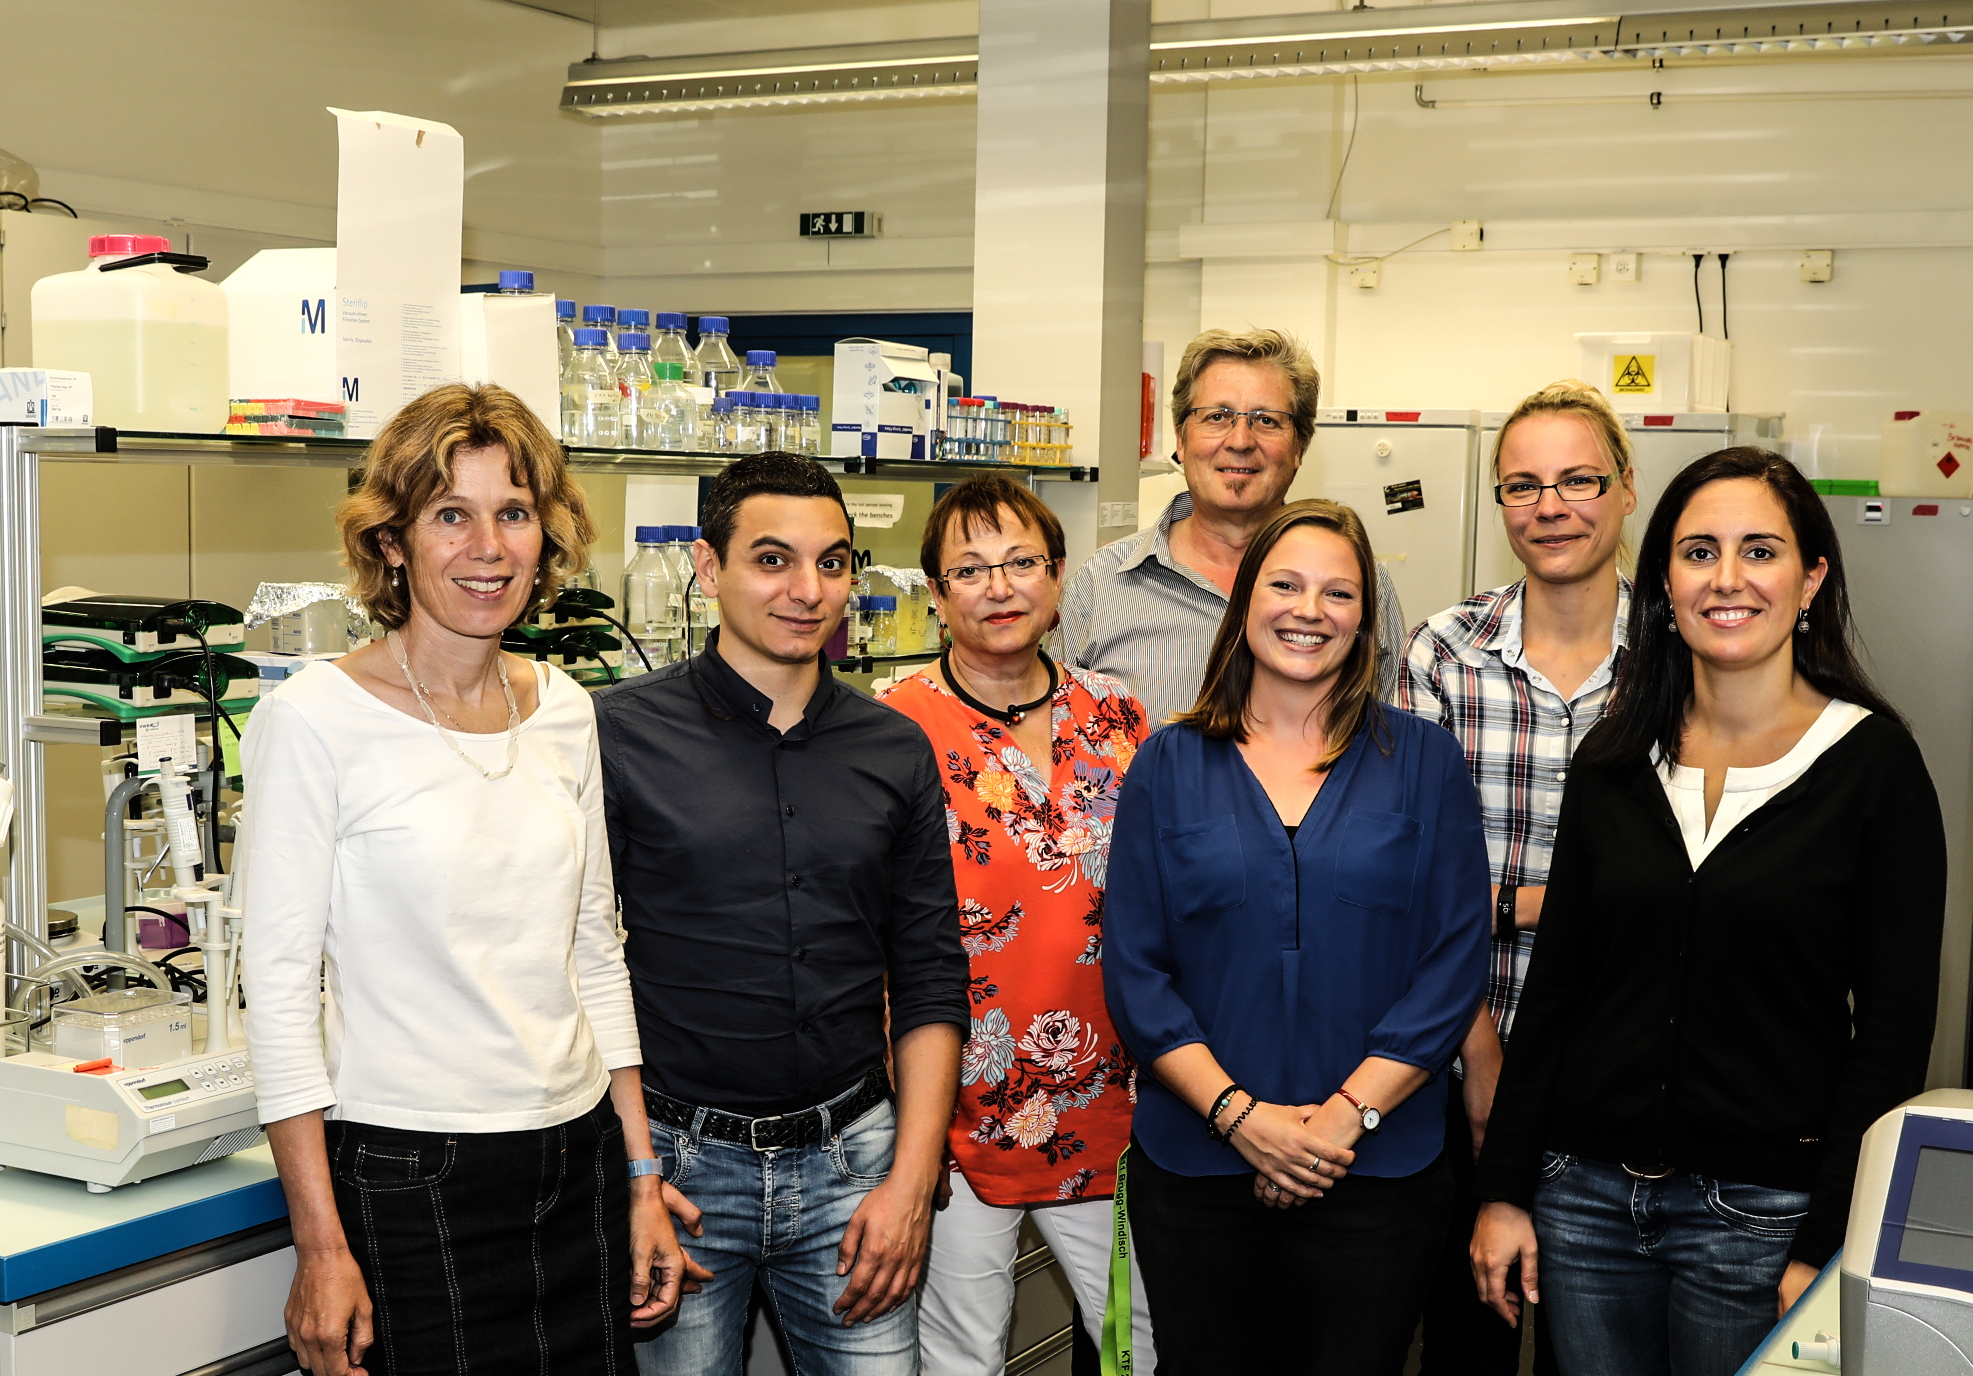 The Malcisbo team from left to right: Irene Schiller (CMO), Giody Bartolomei, Helga Meier, Bruno Oesch (CEO), Annik Frei, Christine Neupert (CSO), Susanna Fleurkens